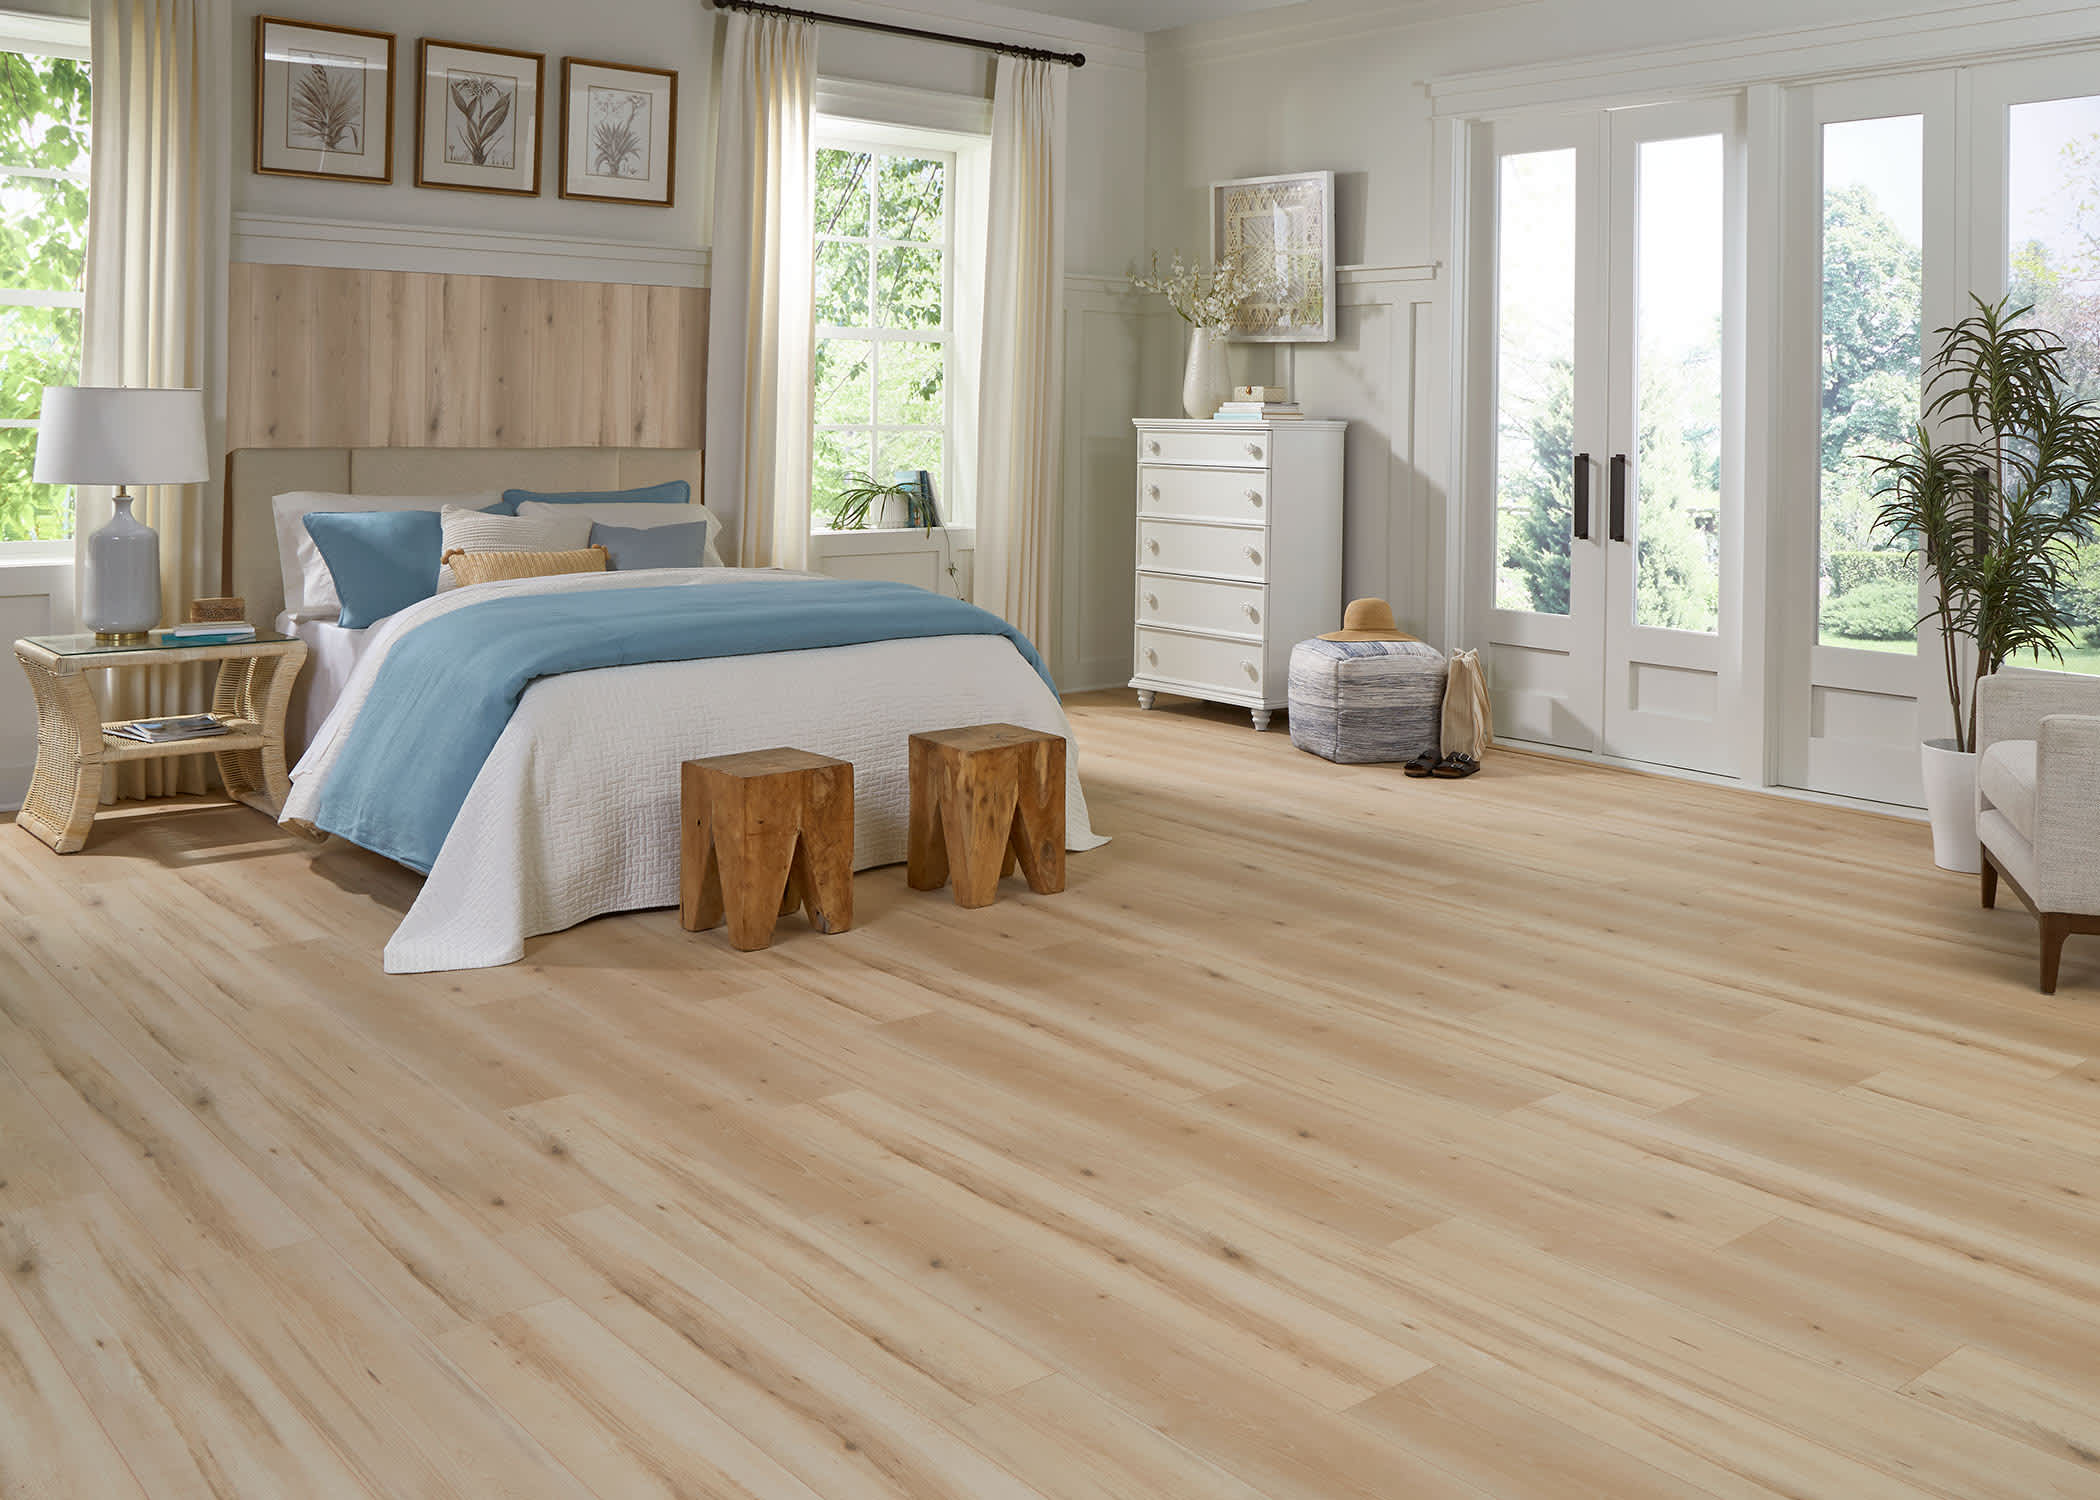 6 Best Types of Fake Wood Flooring (Laminate, Vinyl, Tile)